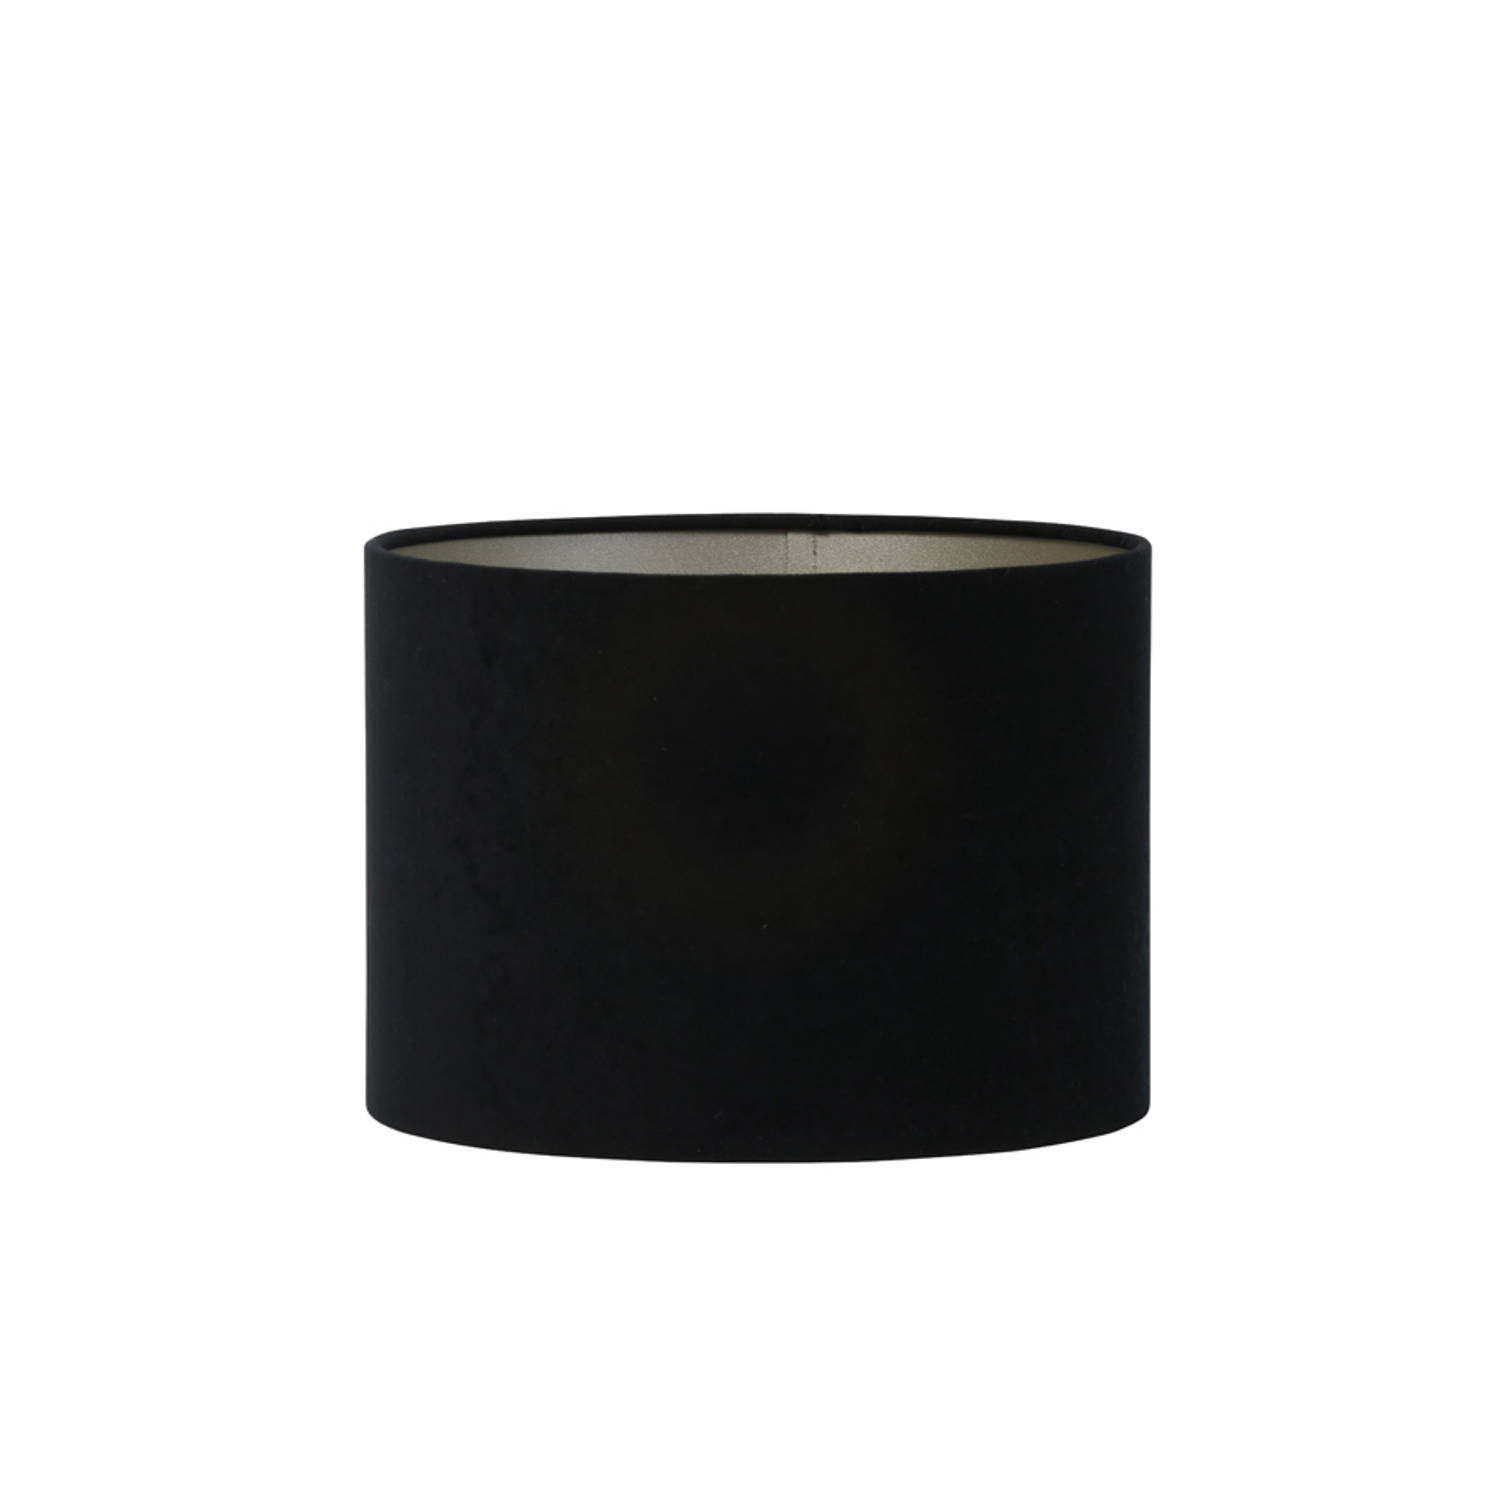 Kap cilinder 25-25-18 cm VELOURS zwart-taupe Light & Living